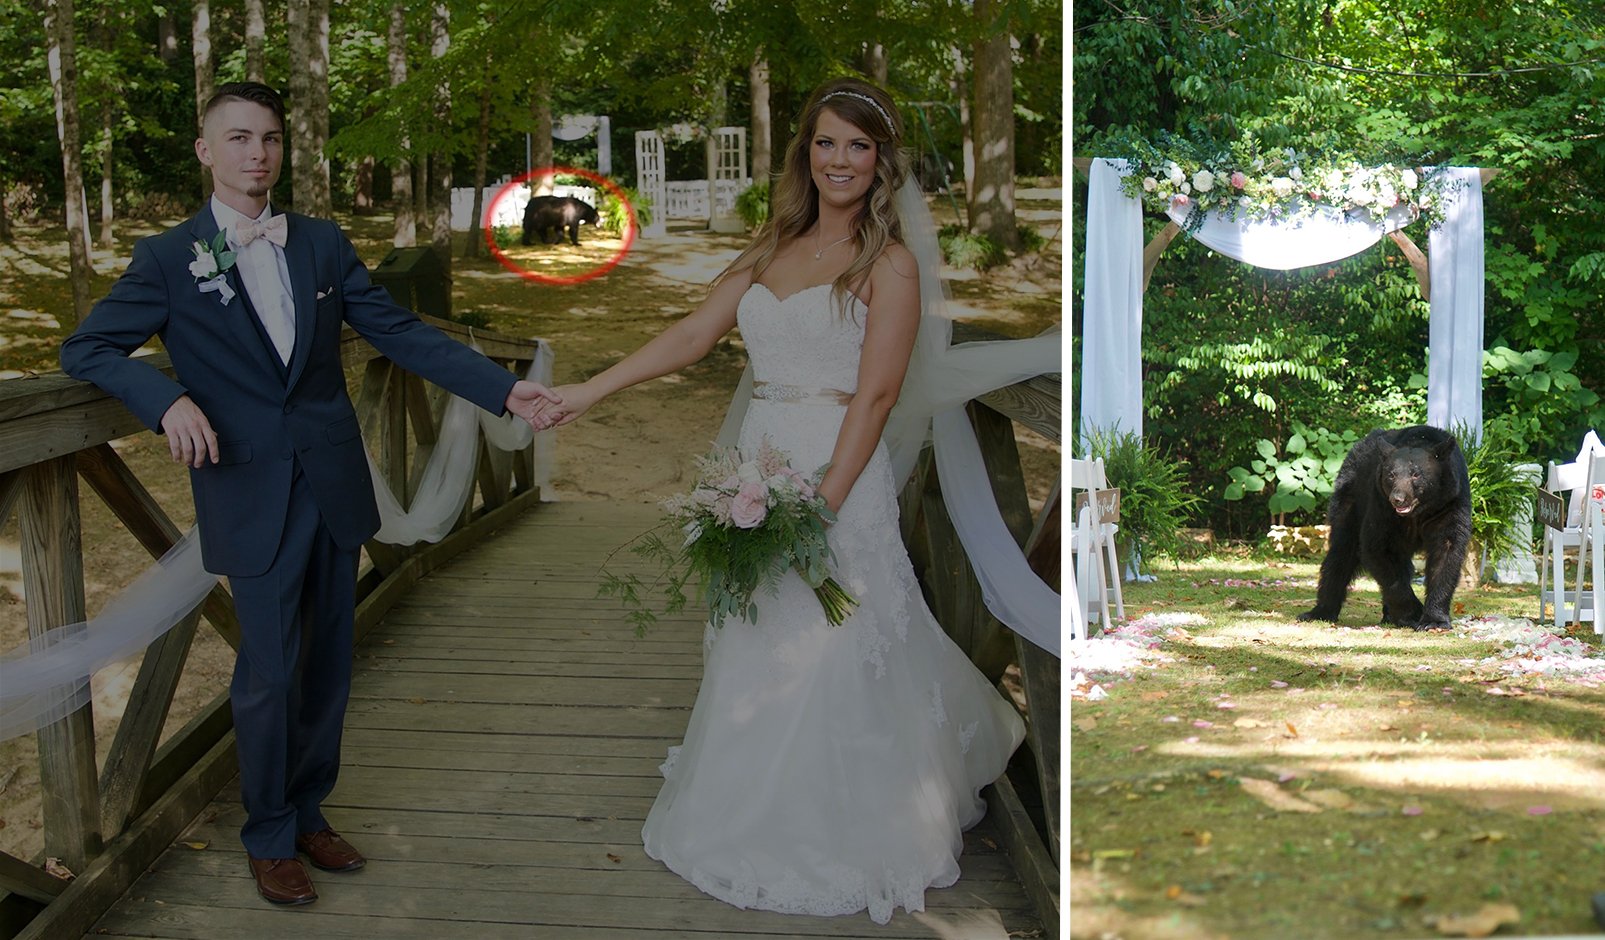 Bear Crashes Wedding Shoot, Photo Bombs Bride and Groom